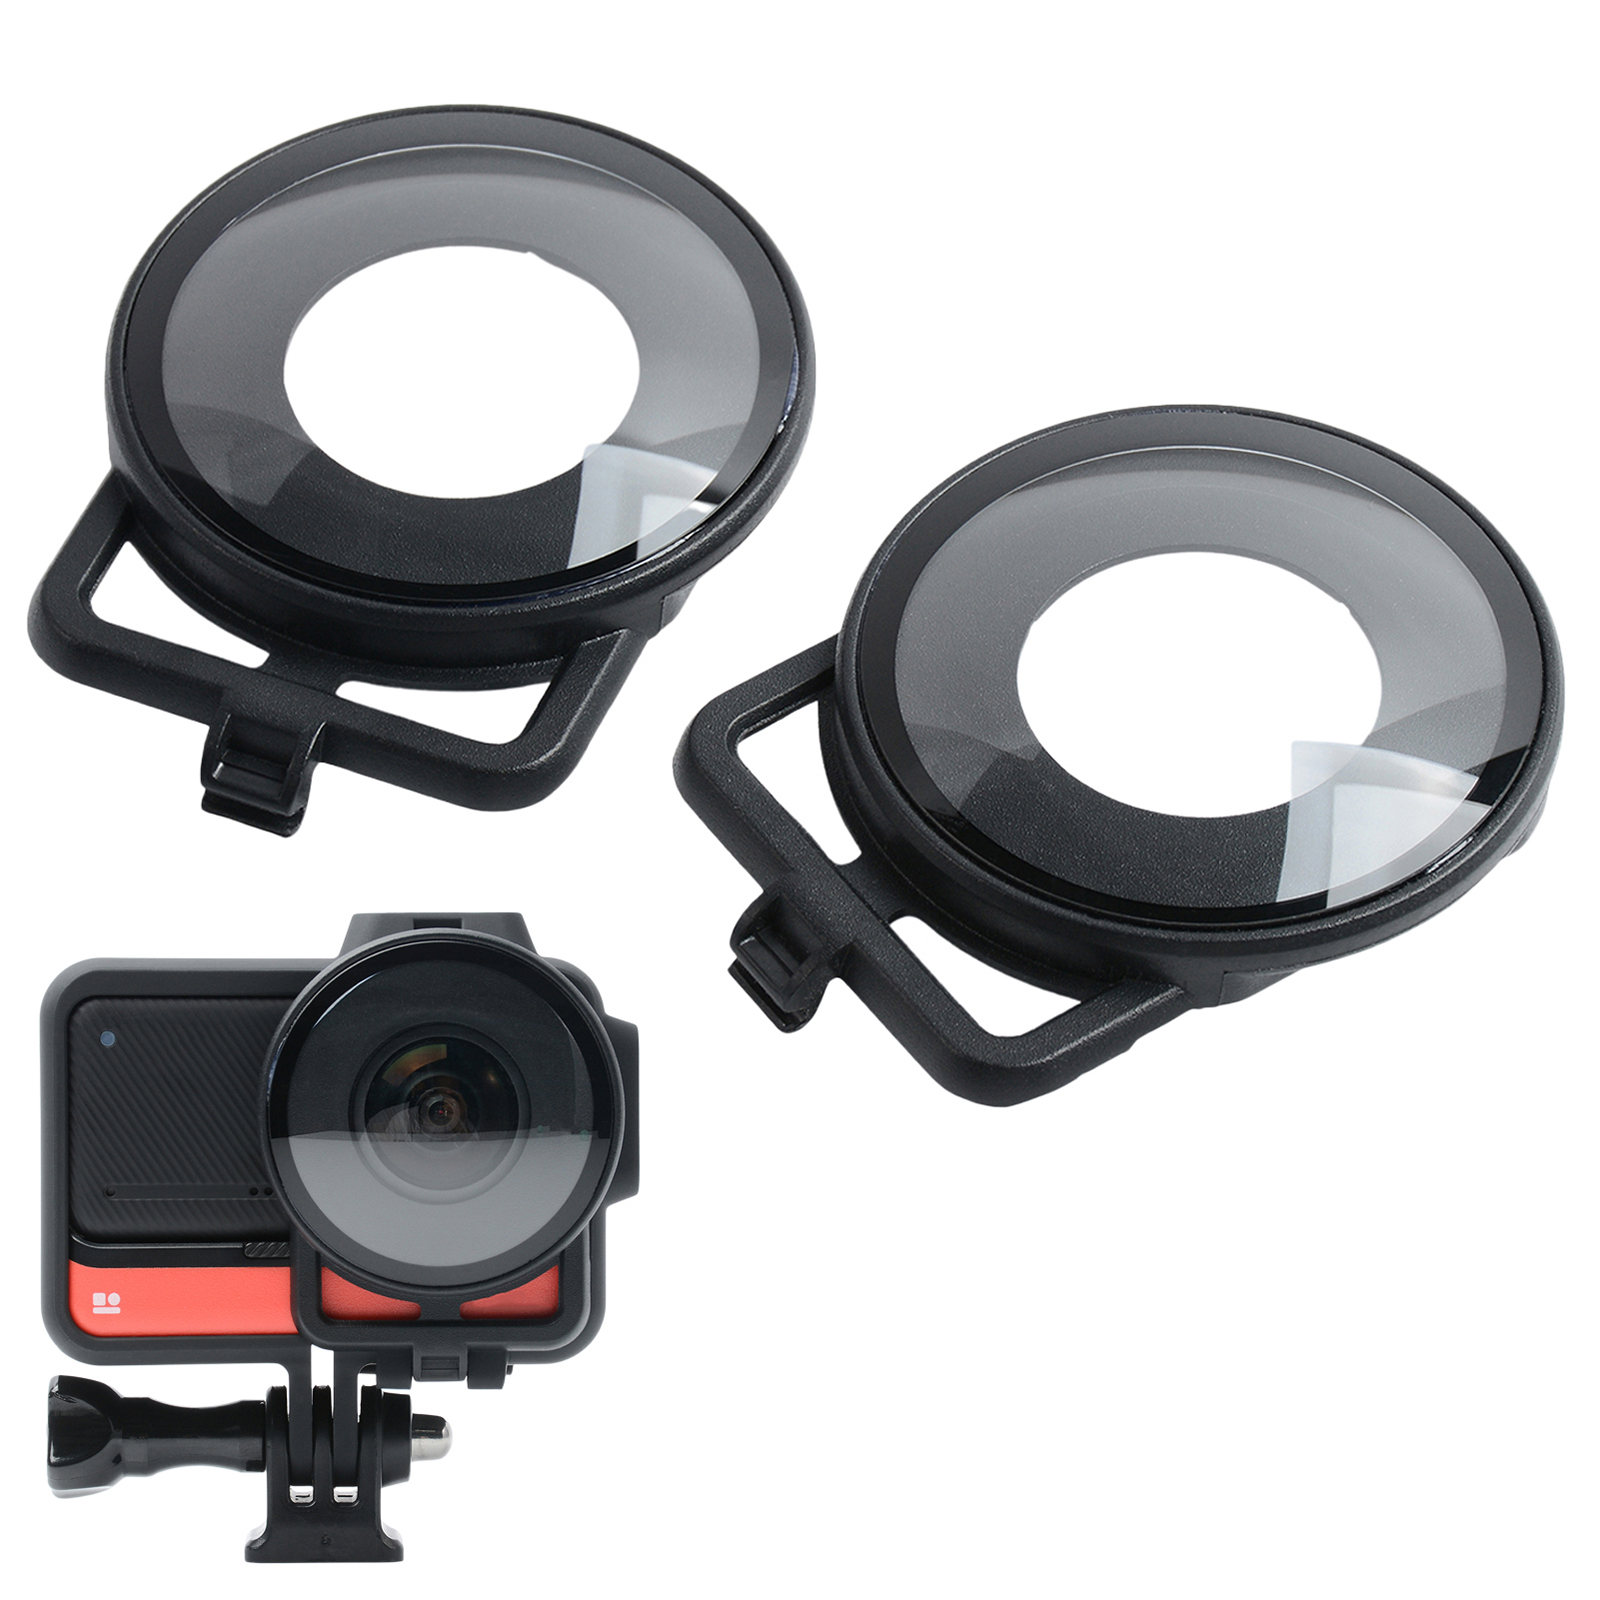 Hd レンズ カバー プロテクター防水防塵シェル ケース互換性 Insta360 One Rs 4k カメラ アクセサリー